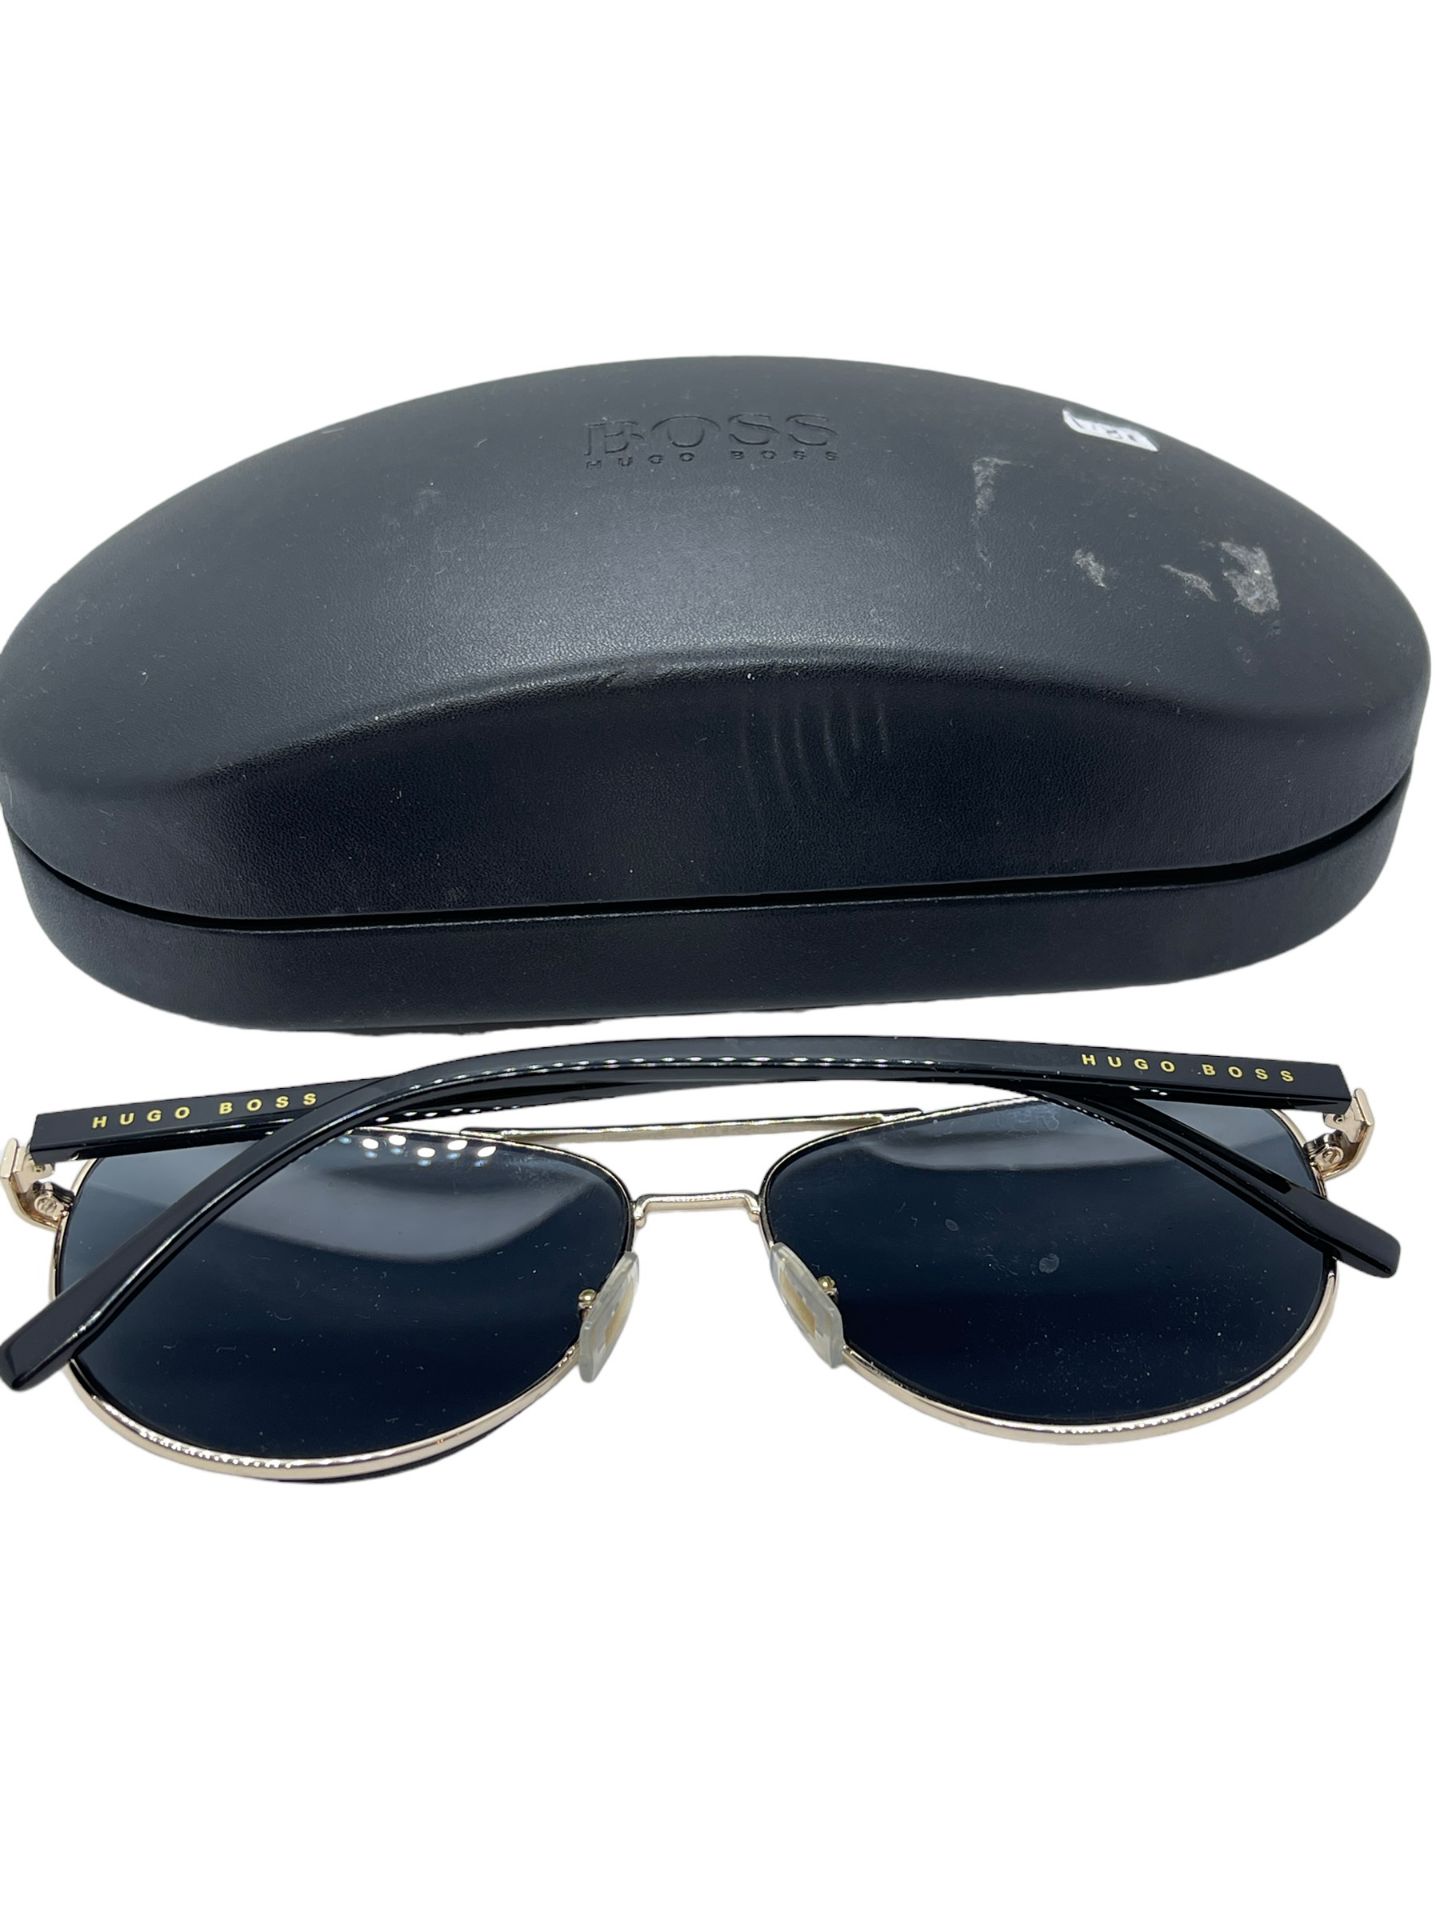 Hugo Boss Sunglasses gold plated aviators with case surplus stock xdemo